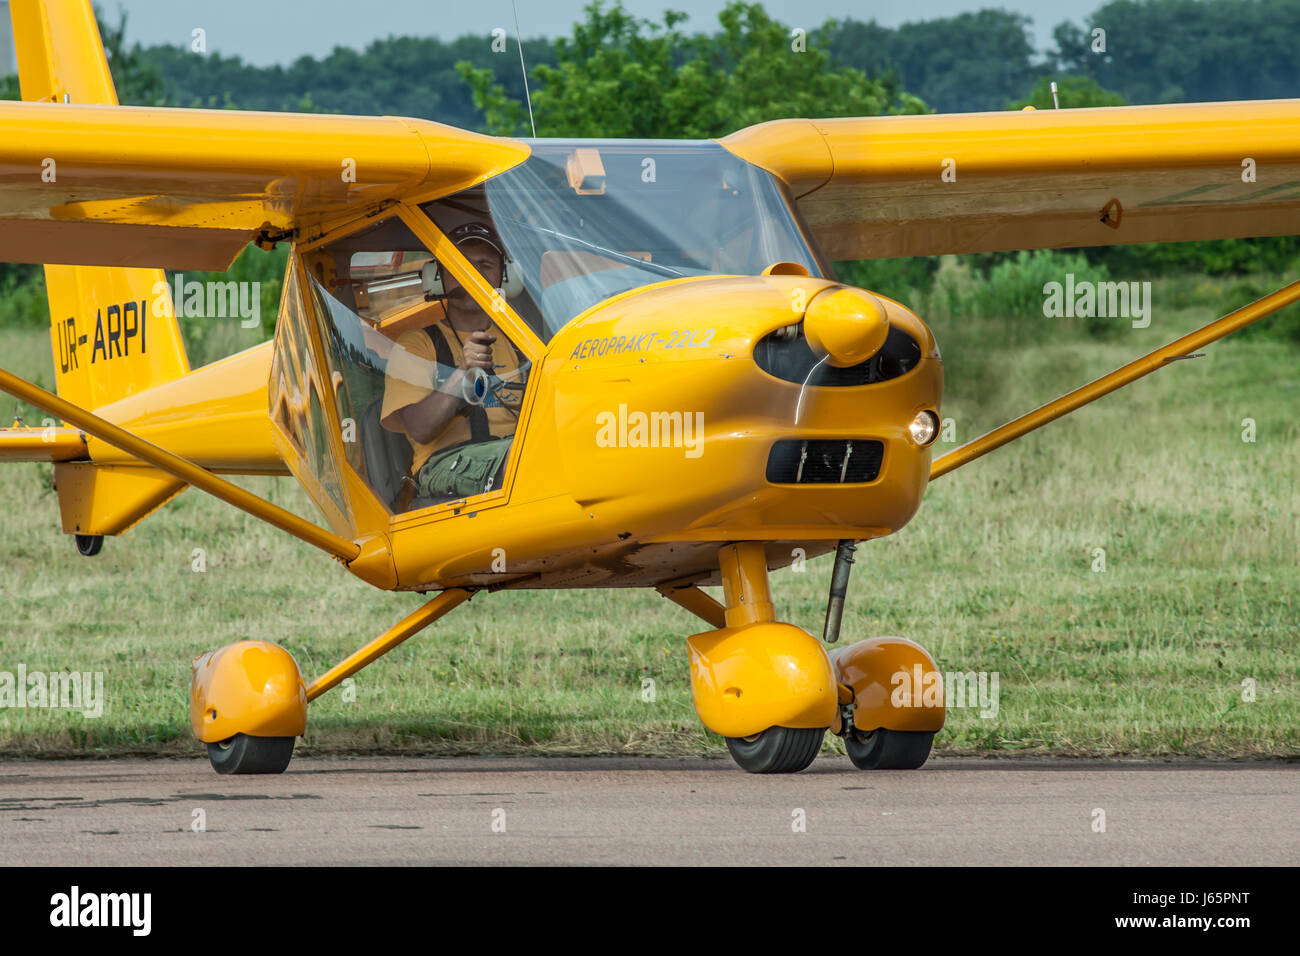 Zhitomir, Ukraine - June 17, 2011: Aeroprakt A-22 ultralight plane on runway before takeoff Stock Photo